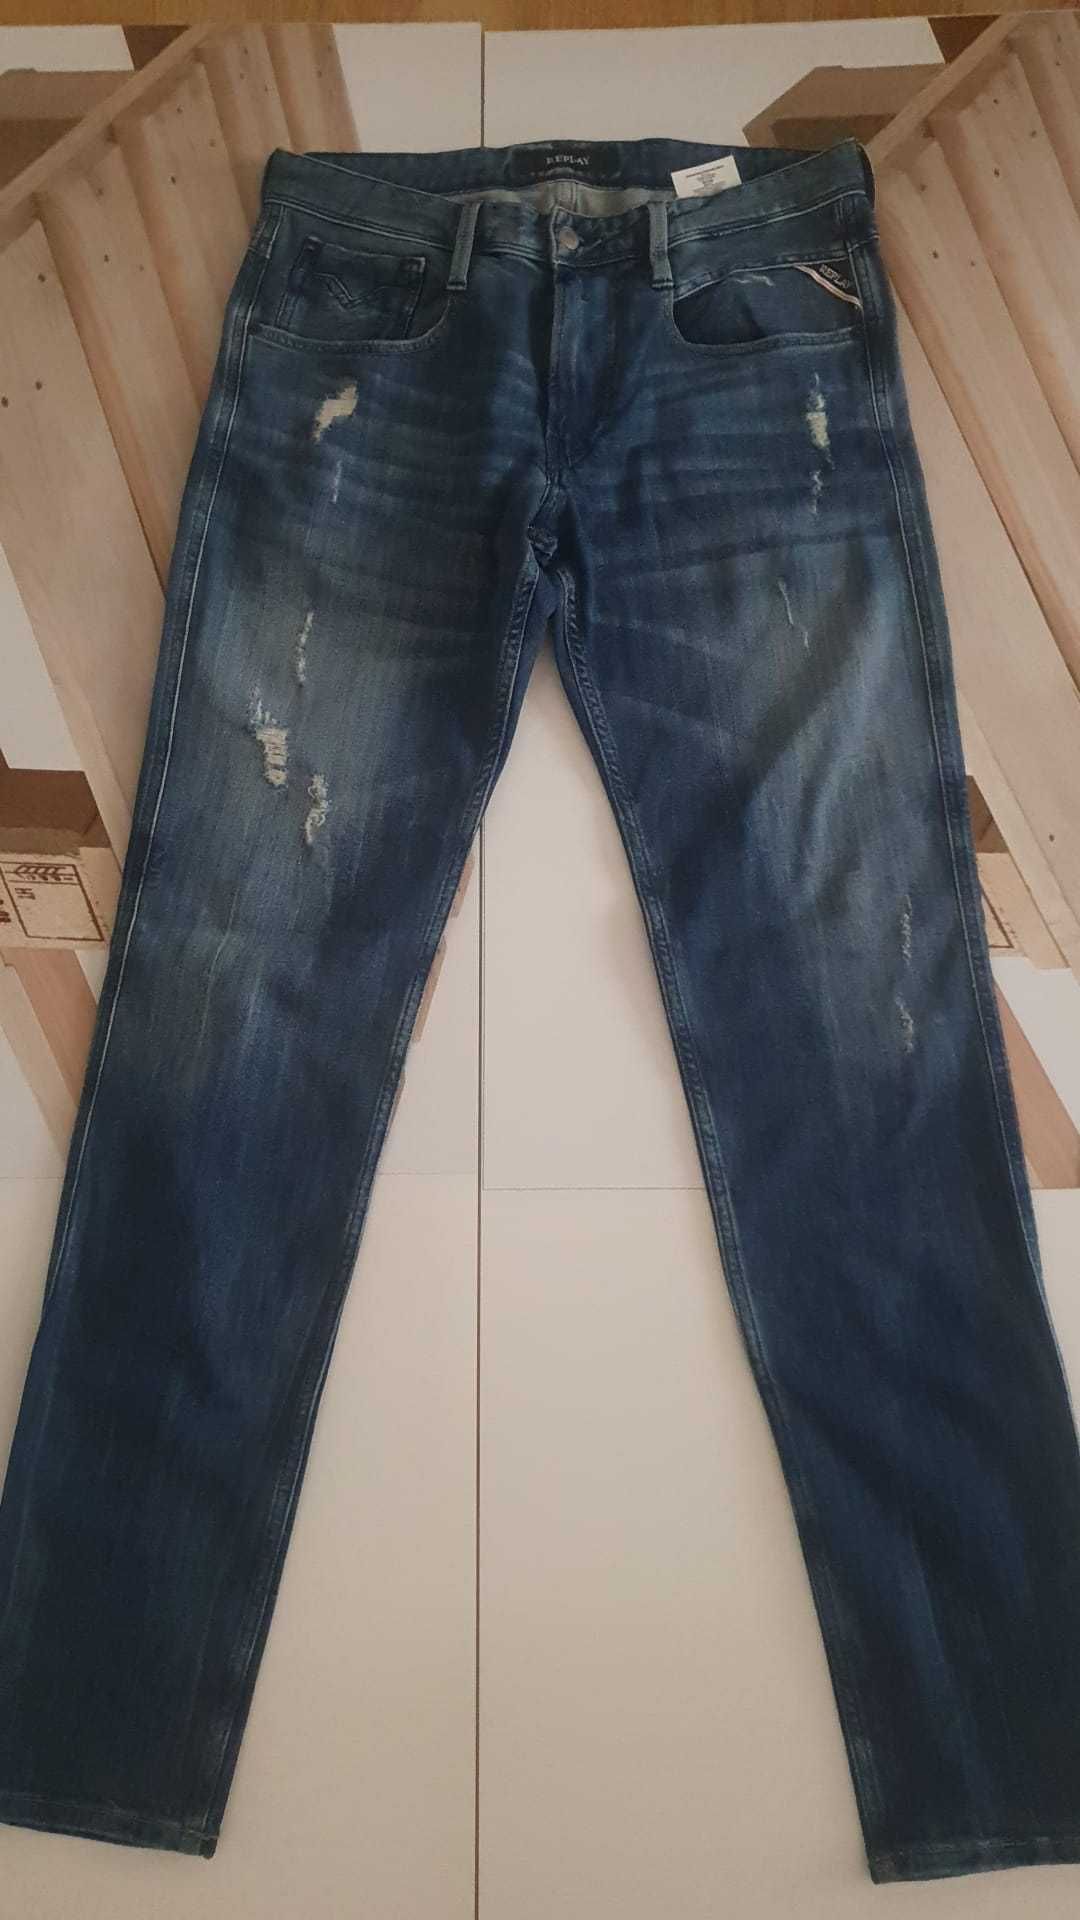 Vand blugi barbat Replay Jeans masura W30  / L32 originali noi